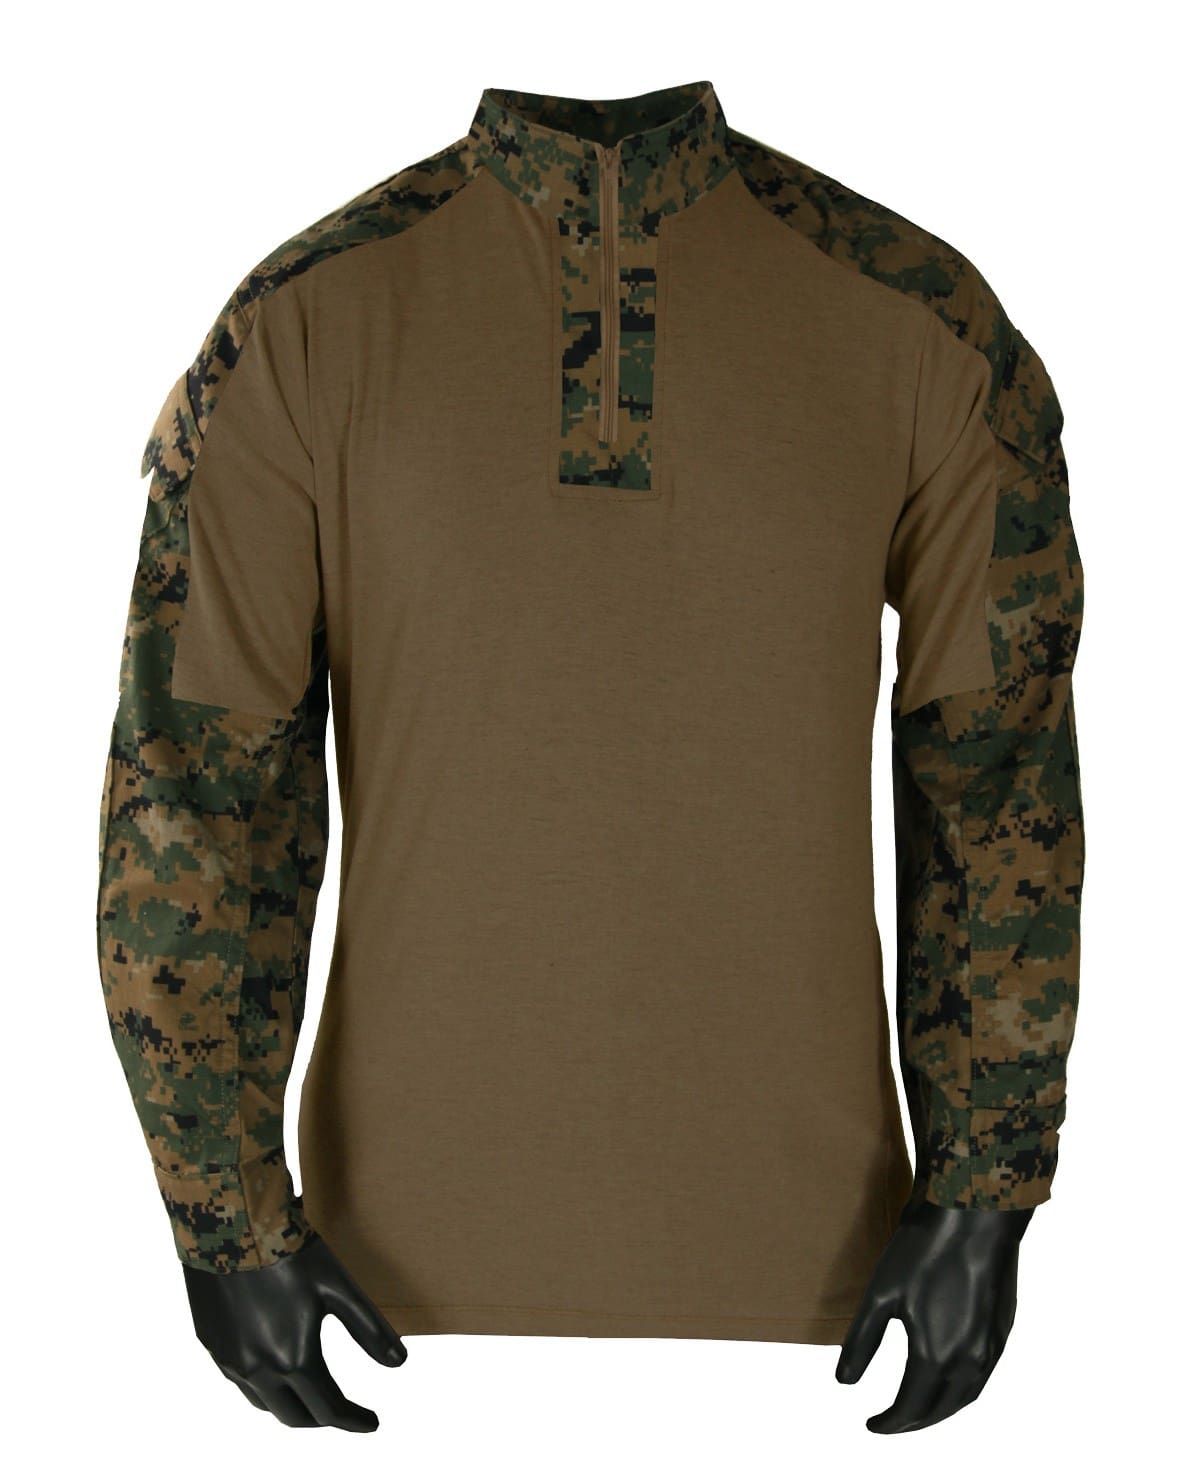 Combat top. USMC Woodland MARPAT. Боевая рубашка "Combat Shirt" олива. Massif Combat Shirt Woodland. Боевая рубаха Combat Frog.